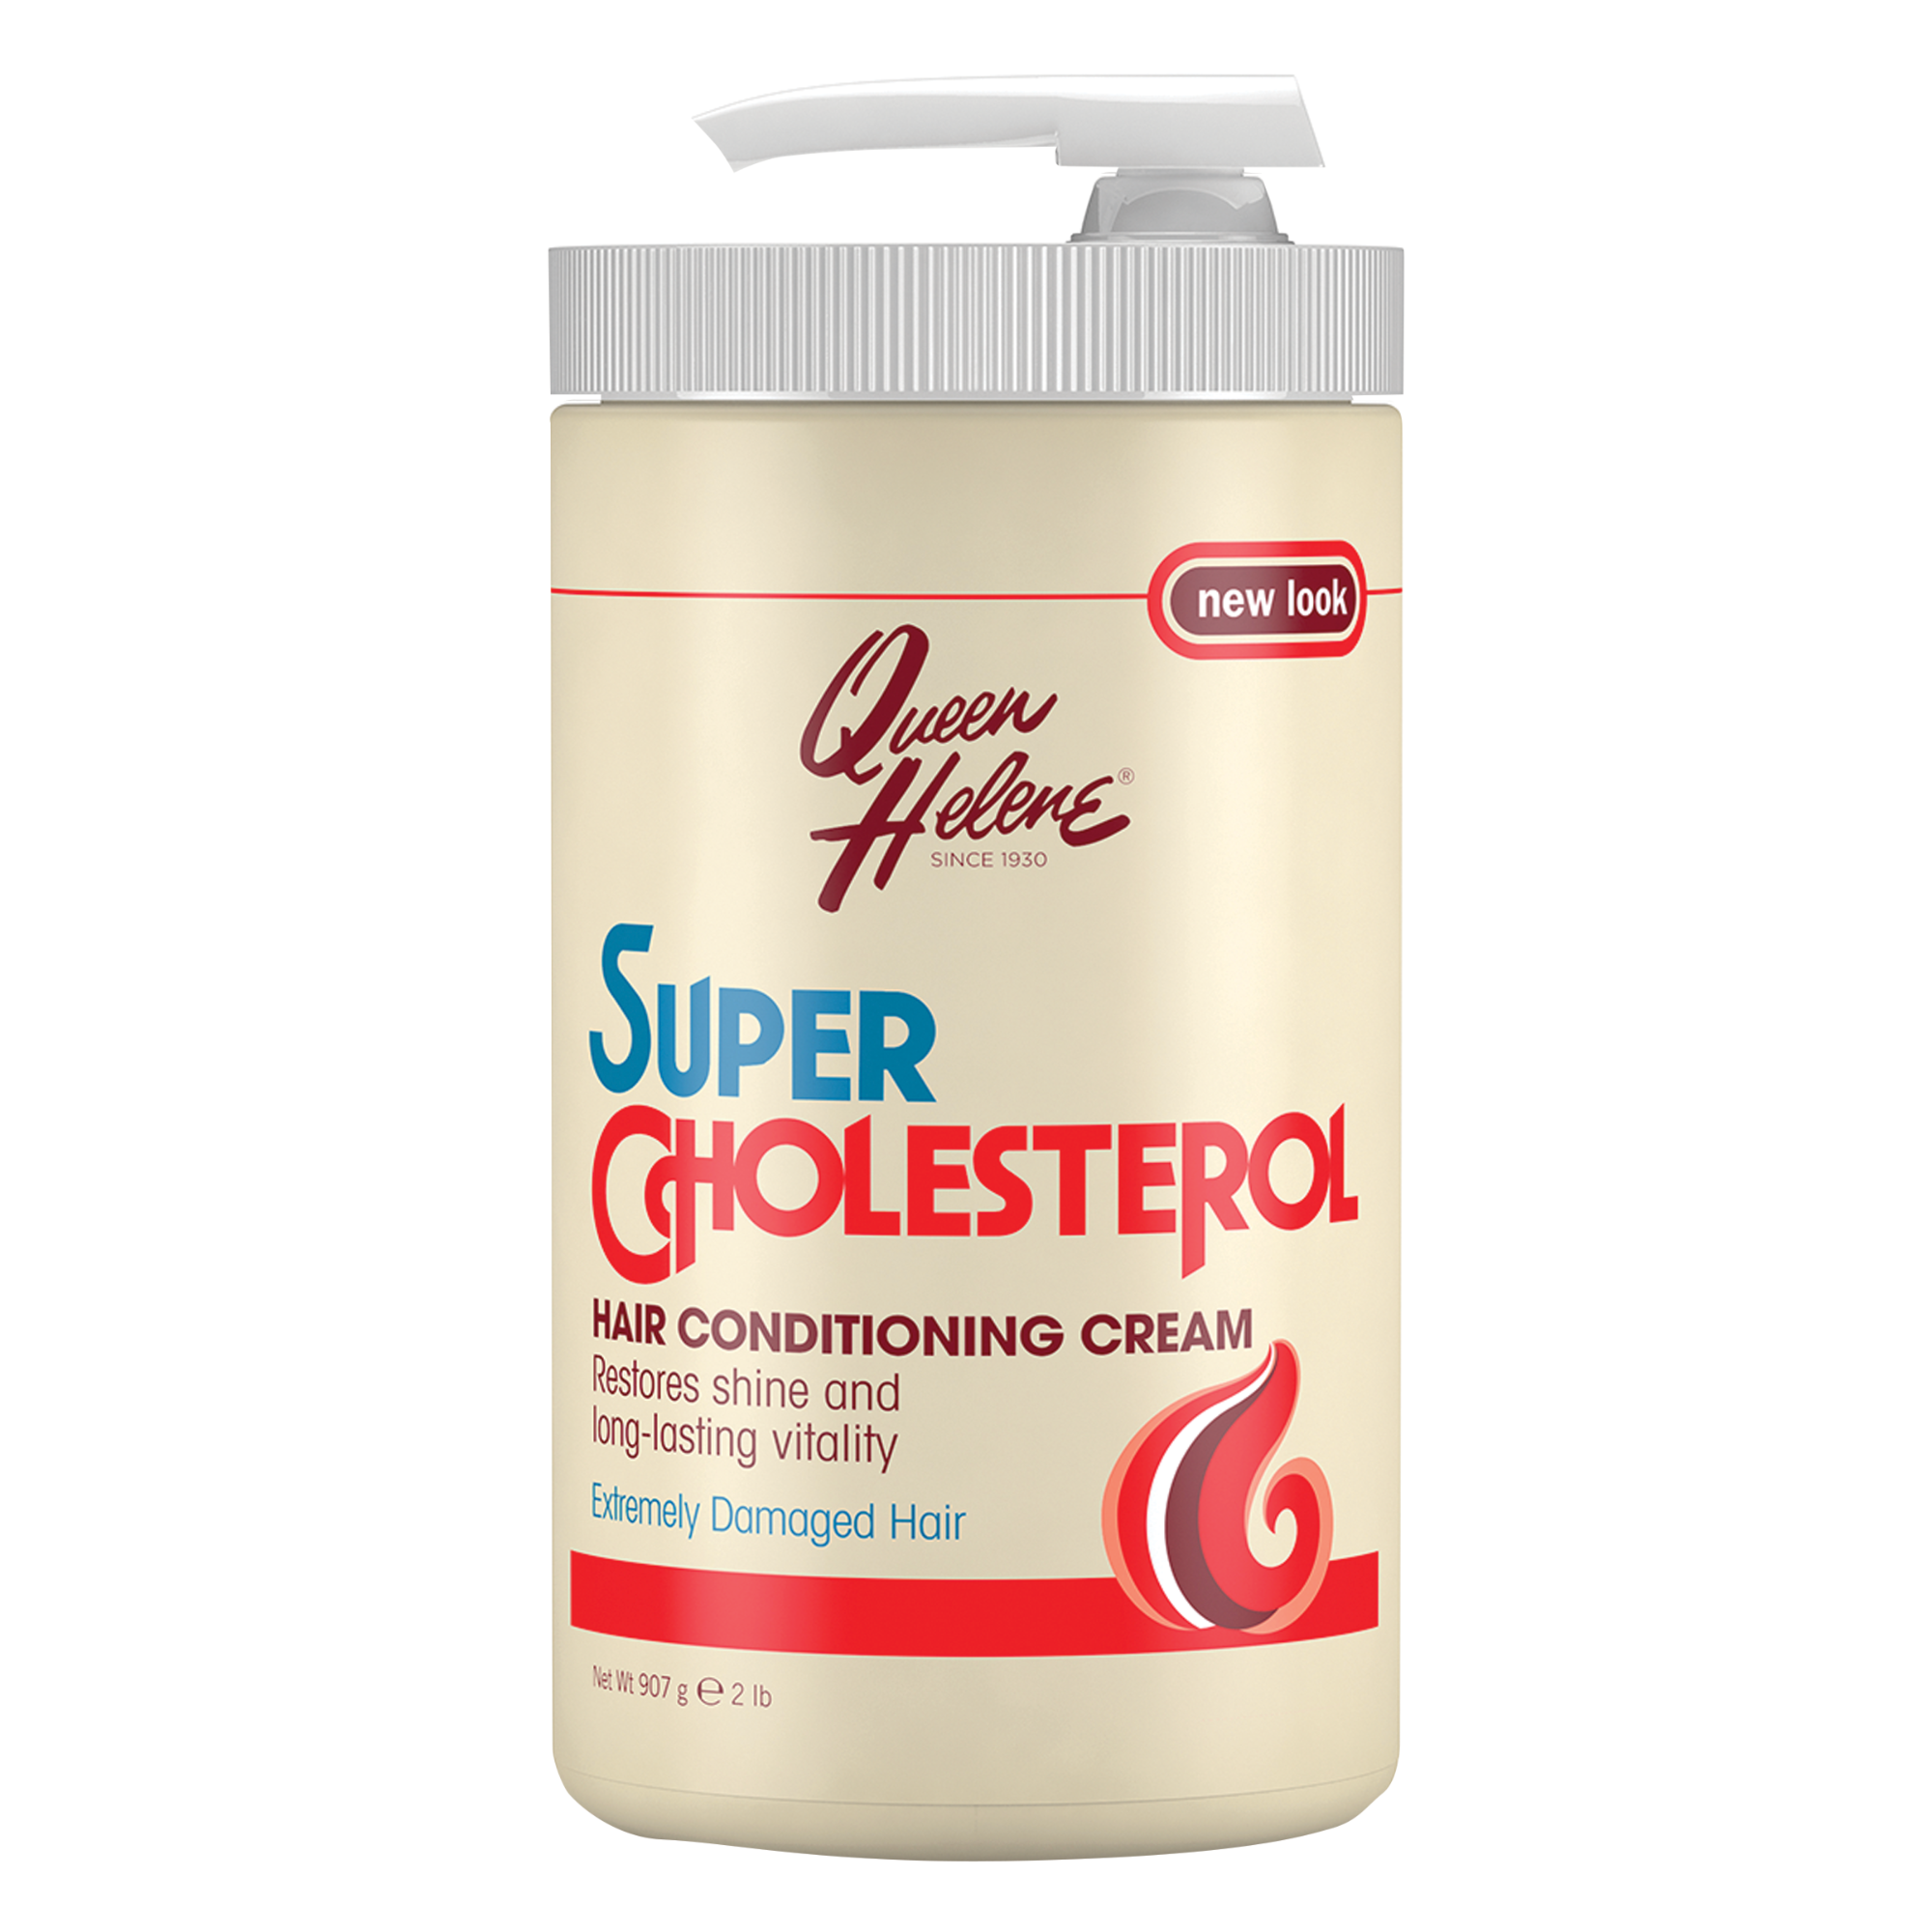 Super Cholesterol Hair Conditioning Cream - 2 Lb.